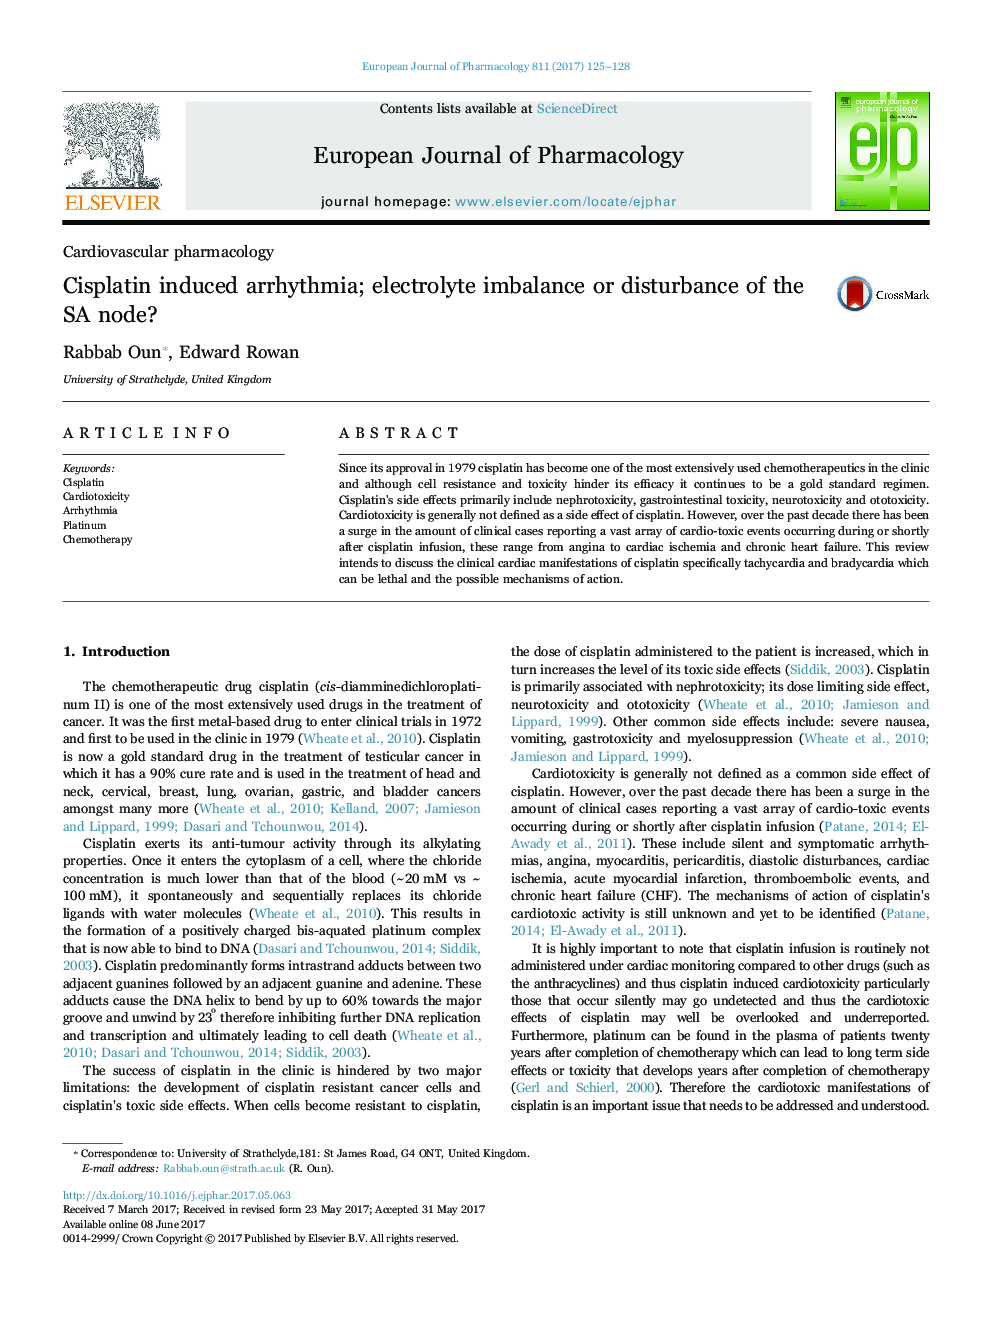 Cisplatin induced arrhythmia; electrolyte imbalance or disturbance of the SA node?